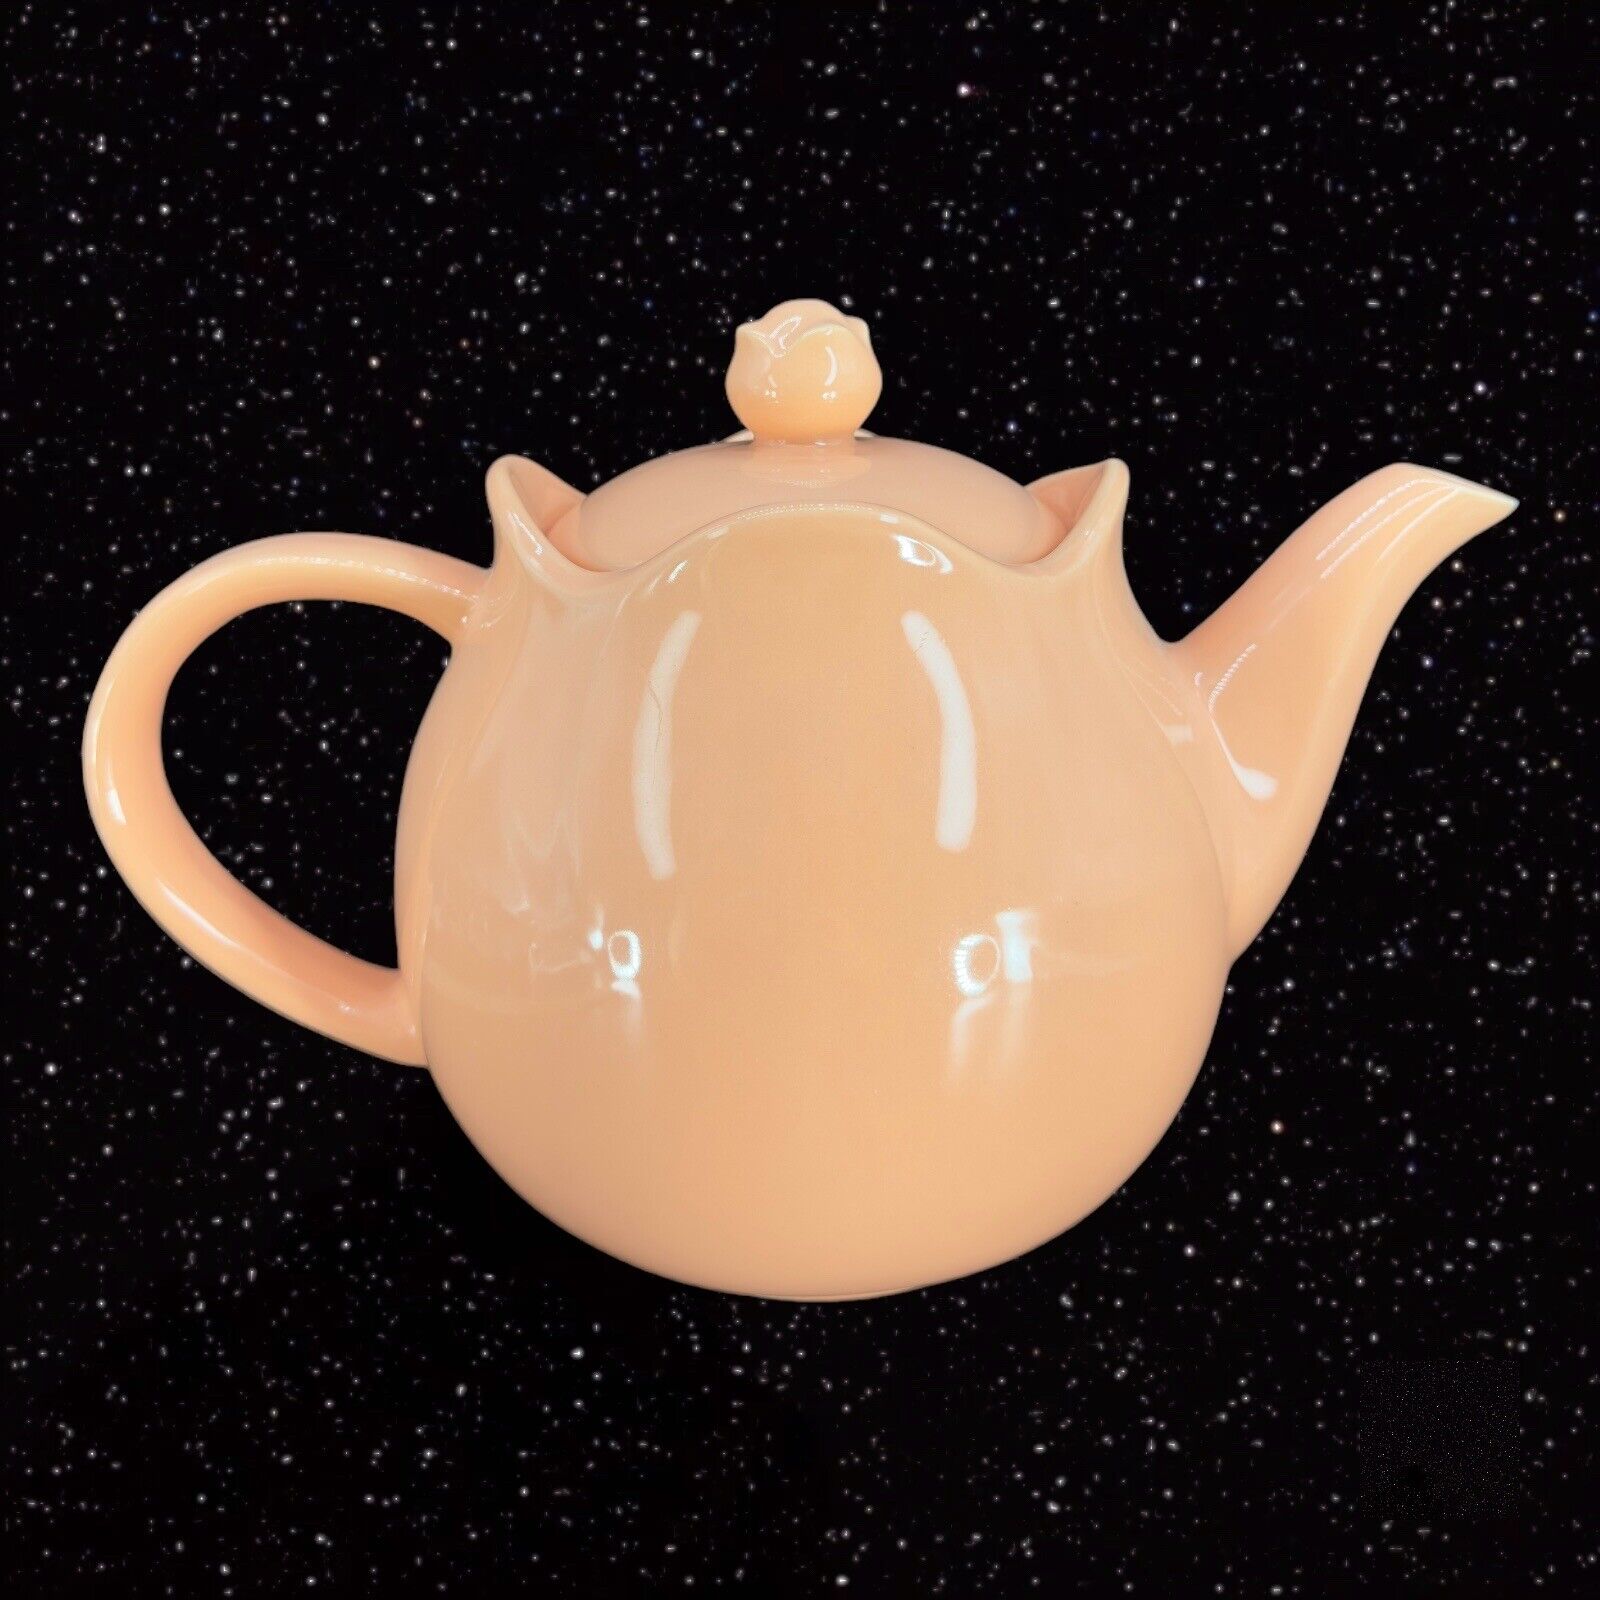 Debi Lilly Ceramic Light Peach Color Teapot W Flower Shaped Top Lid 9.5”W 6”T